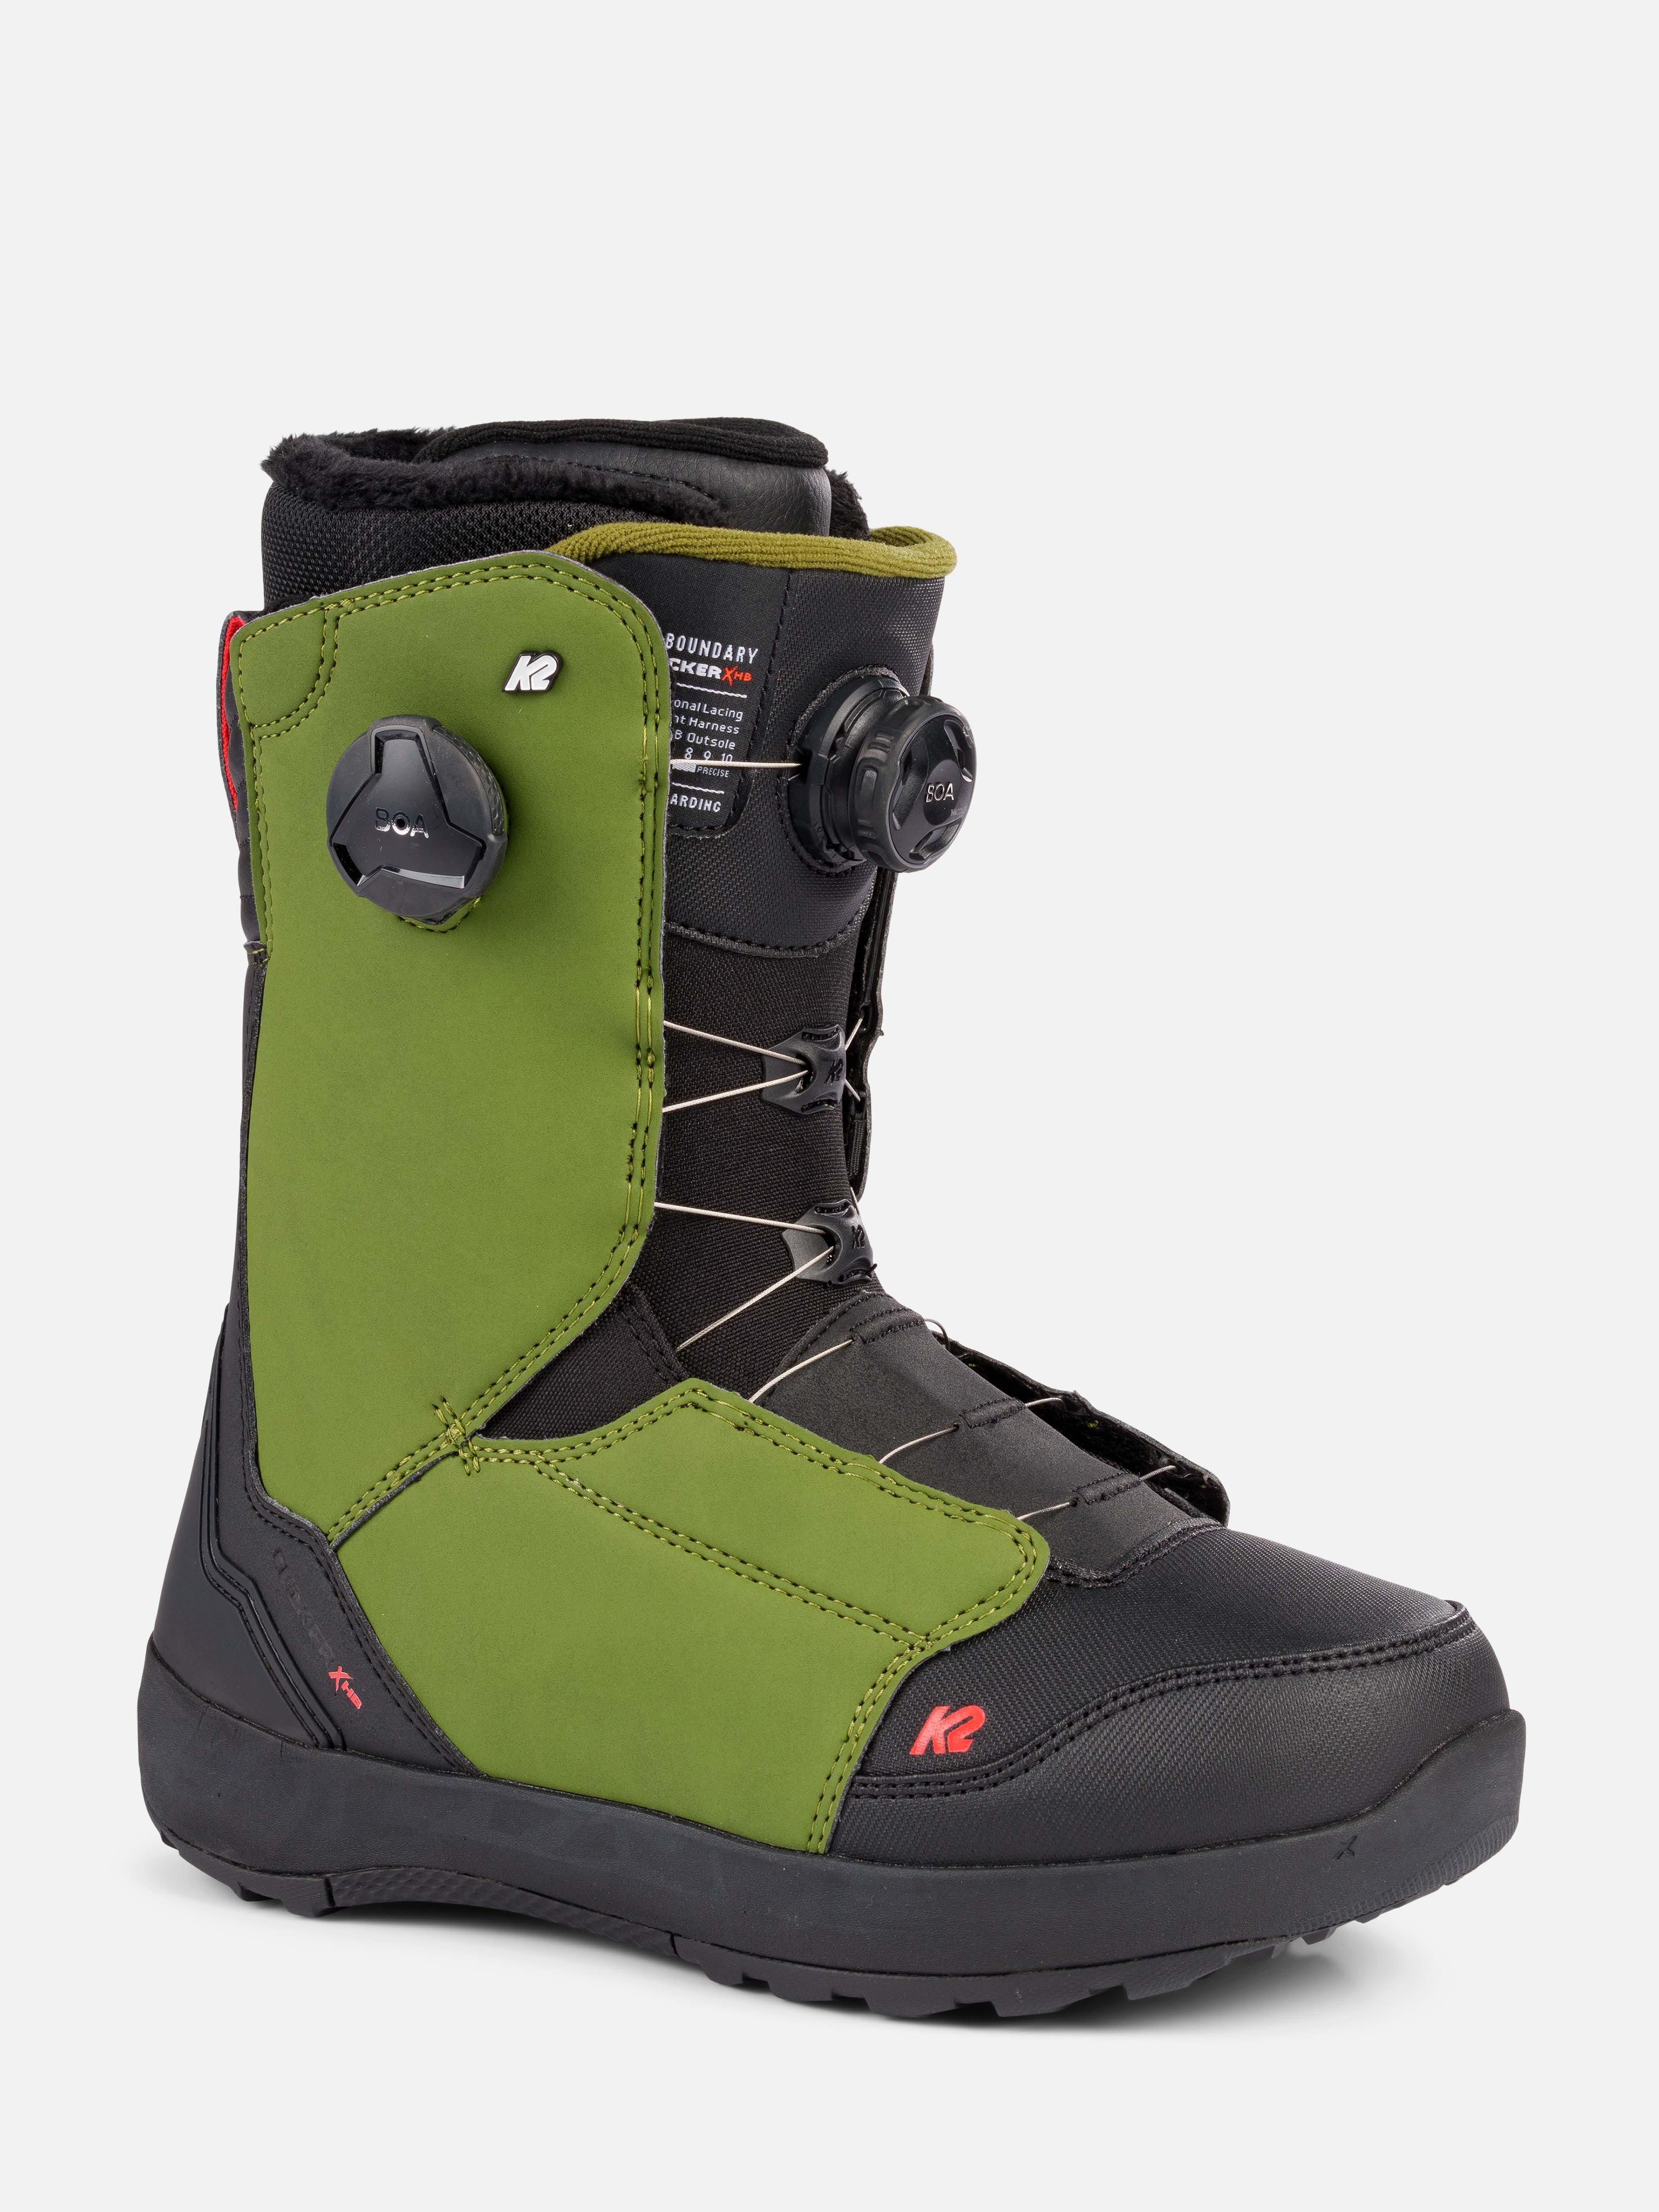 特価K2 Snowboards Boundary Snowboard Boots 26.0並行輸入商品 通販 